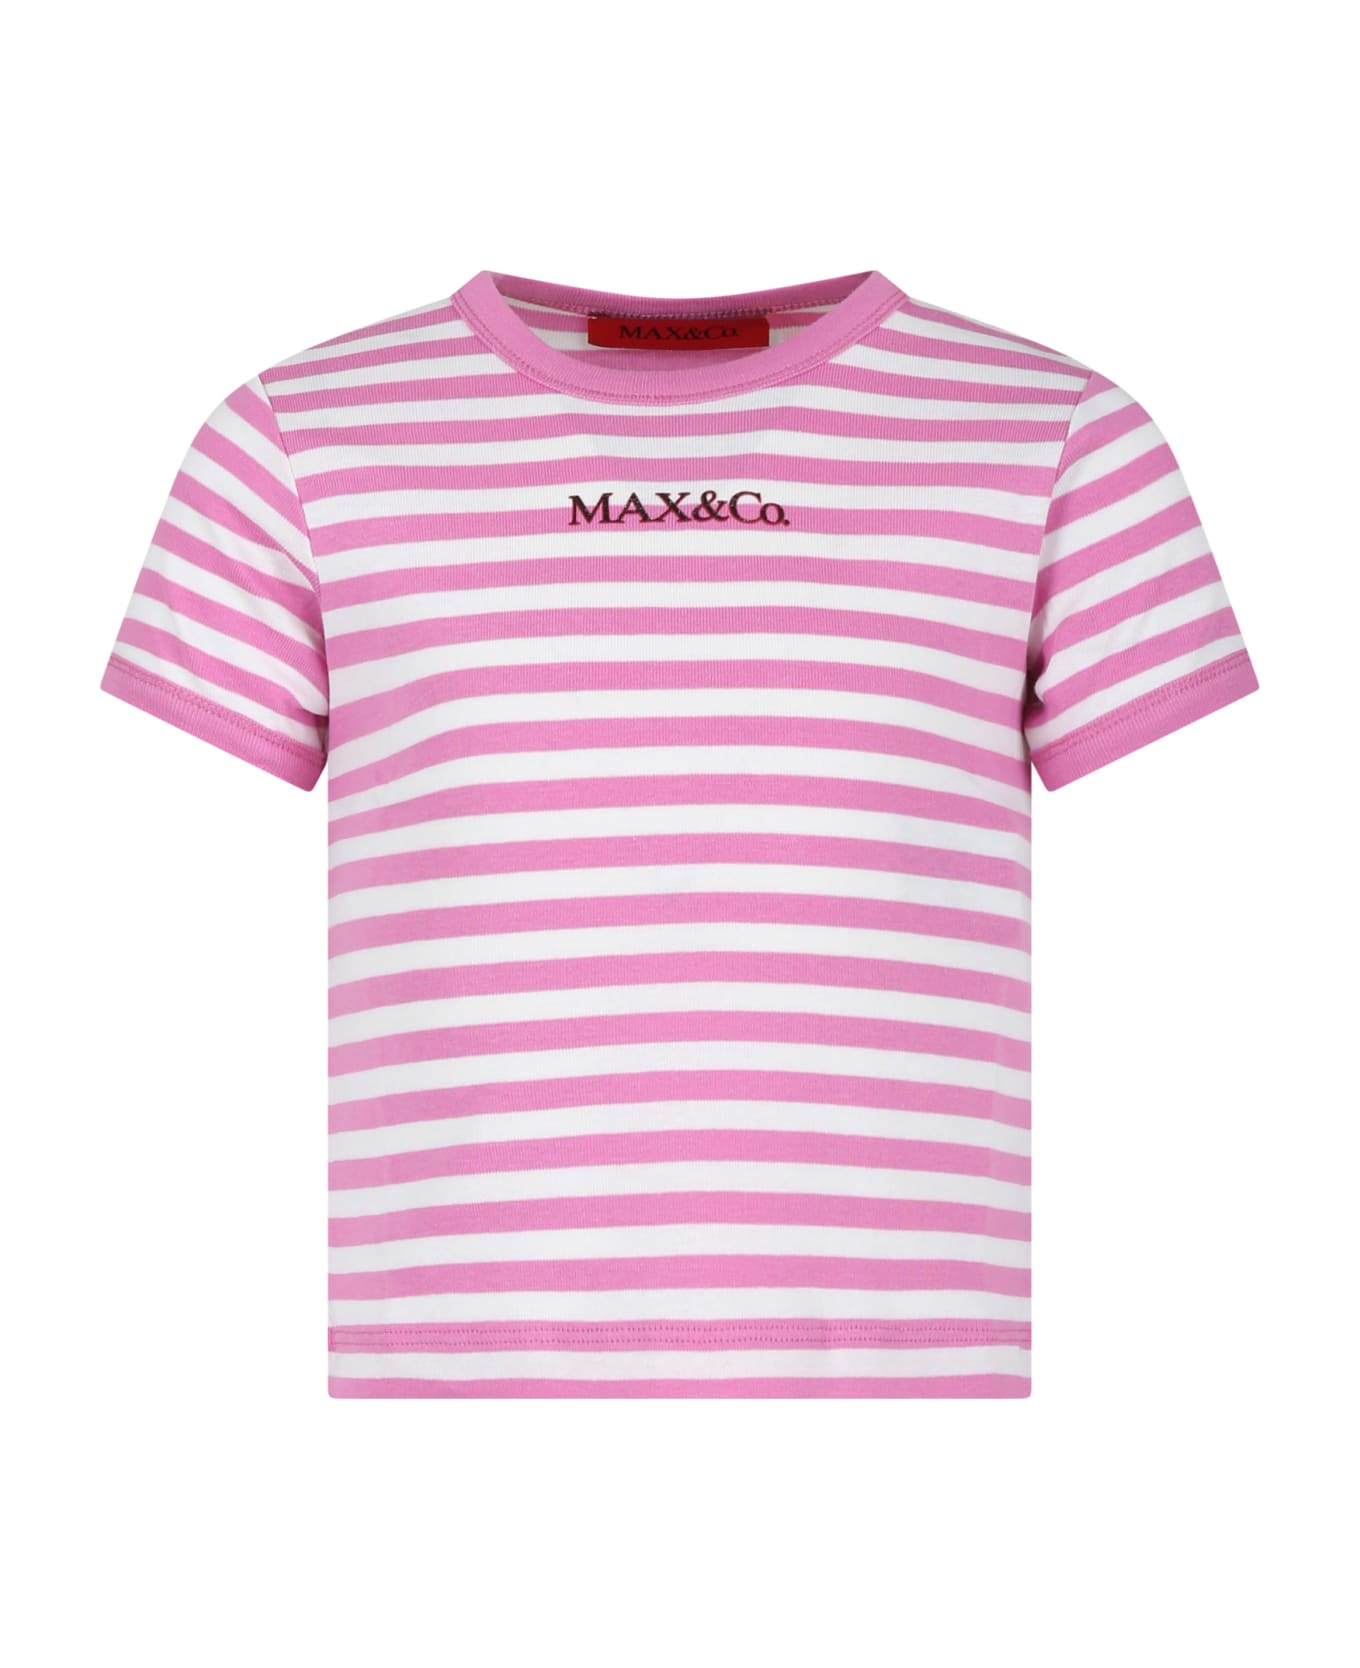 Max&Co. Fuchsia T-shirt For Girl With Logo - Fuchsia